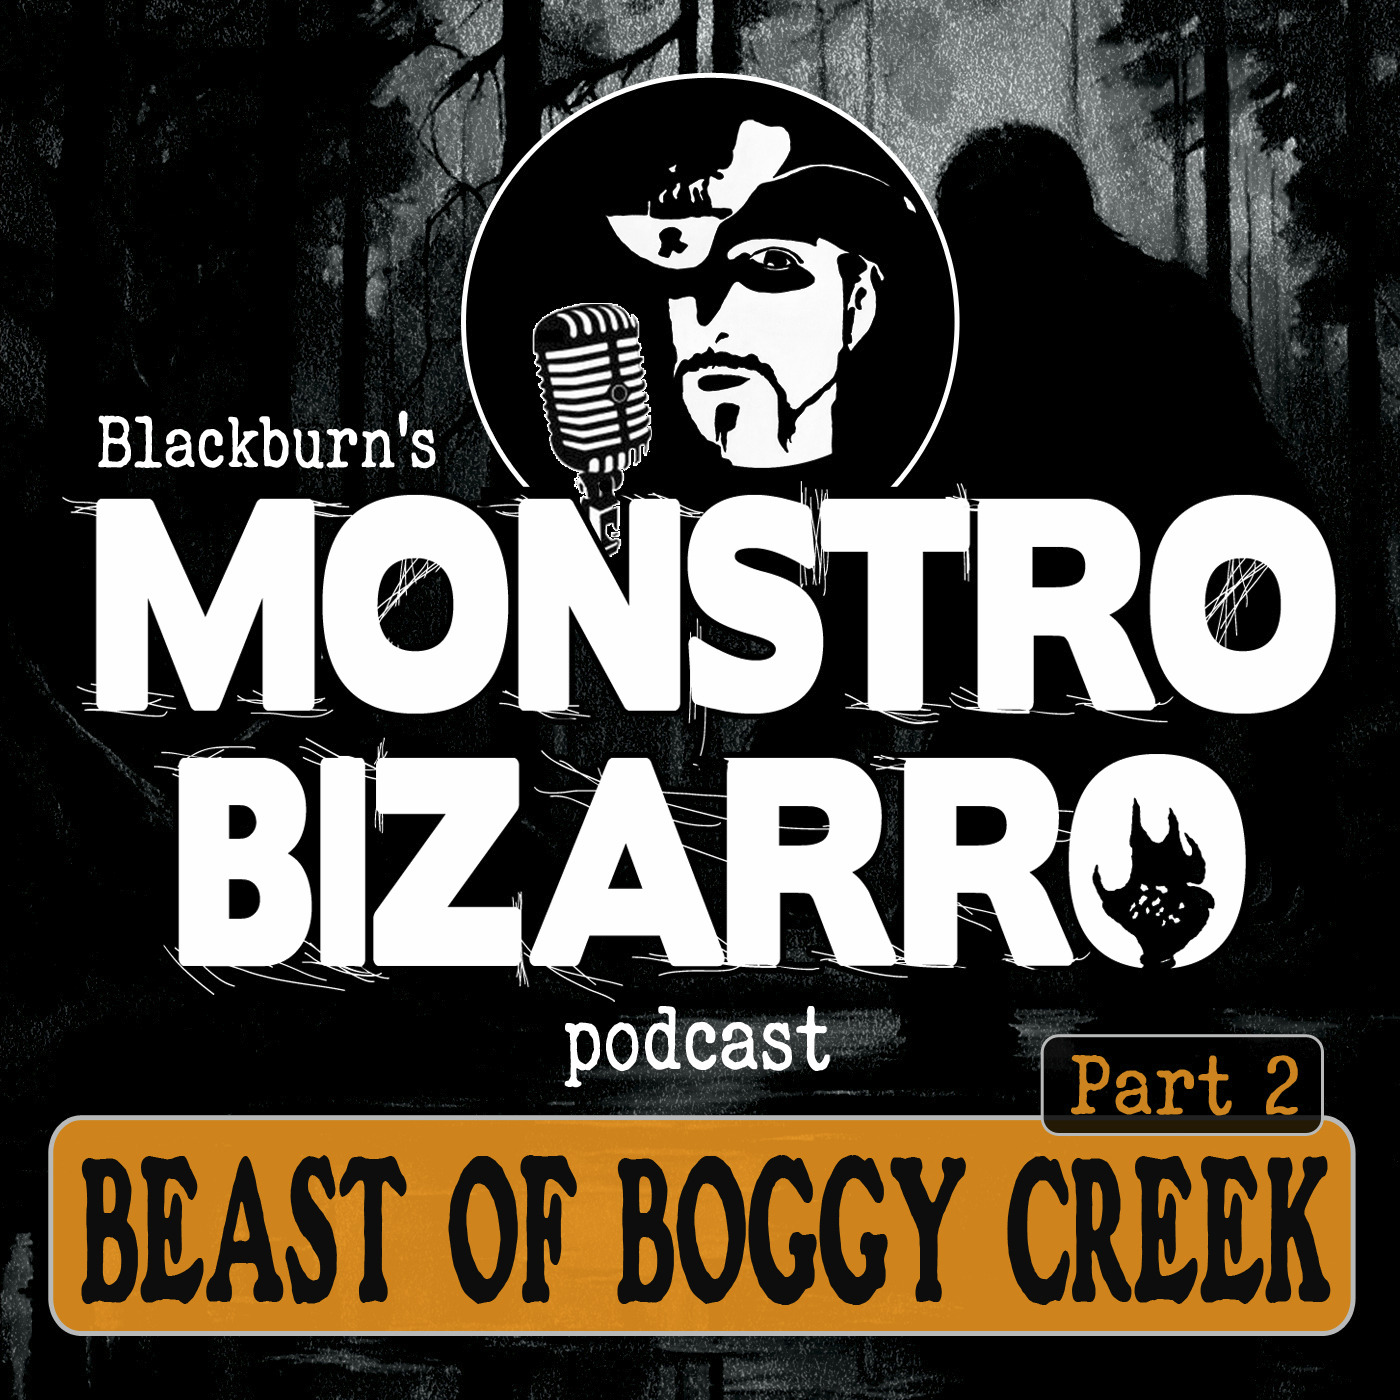 Beast of Boggy Creek (Part 2)